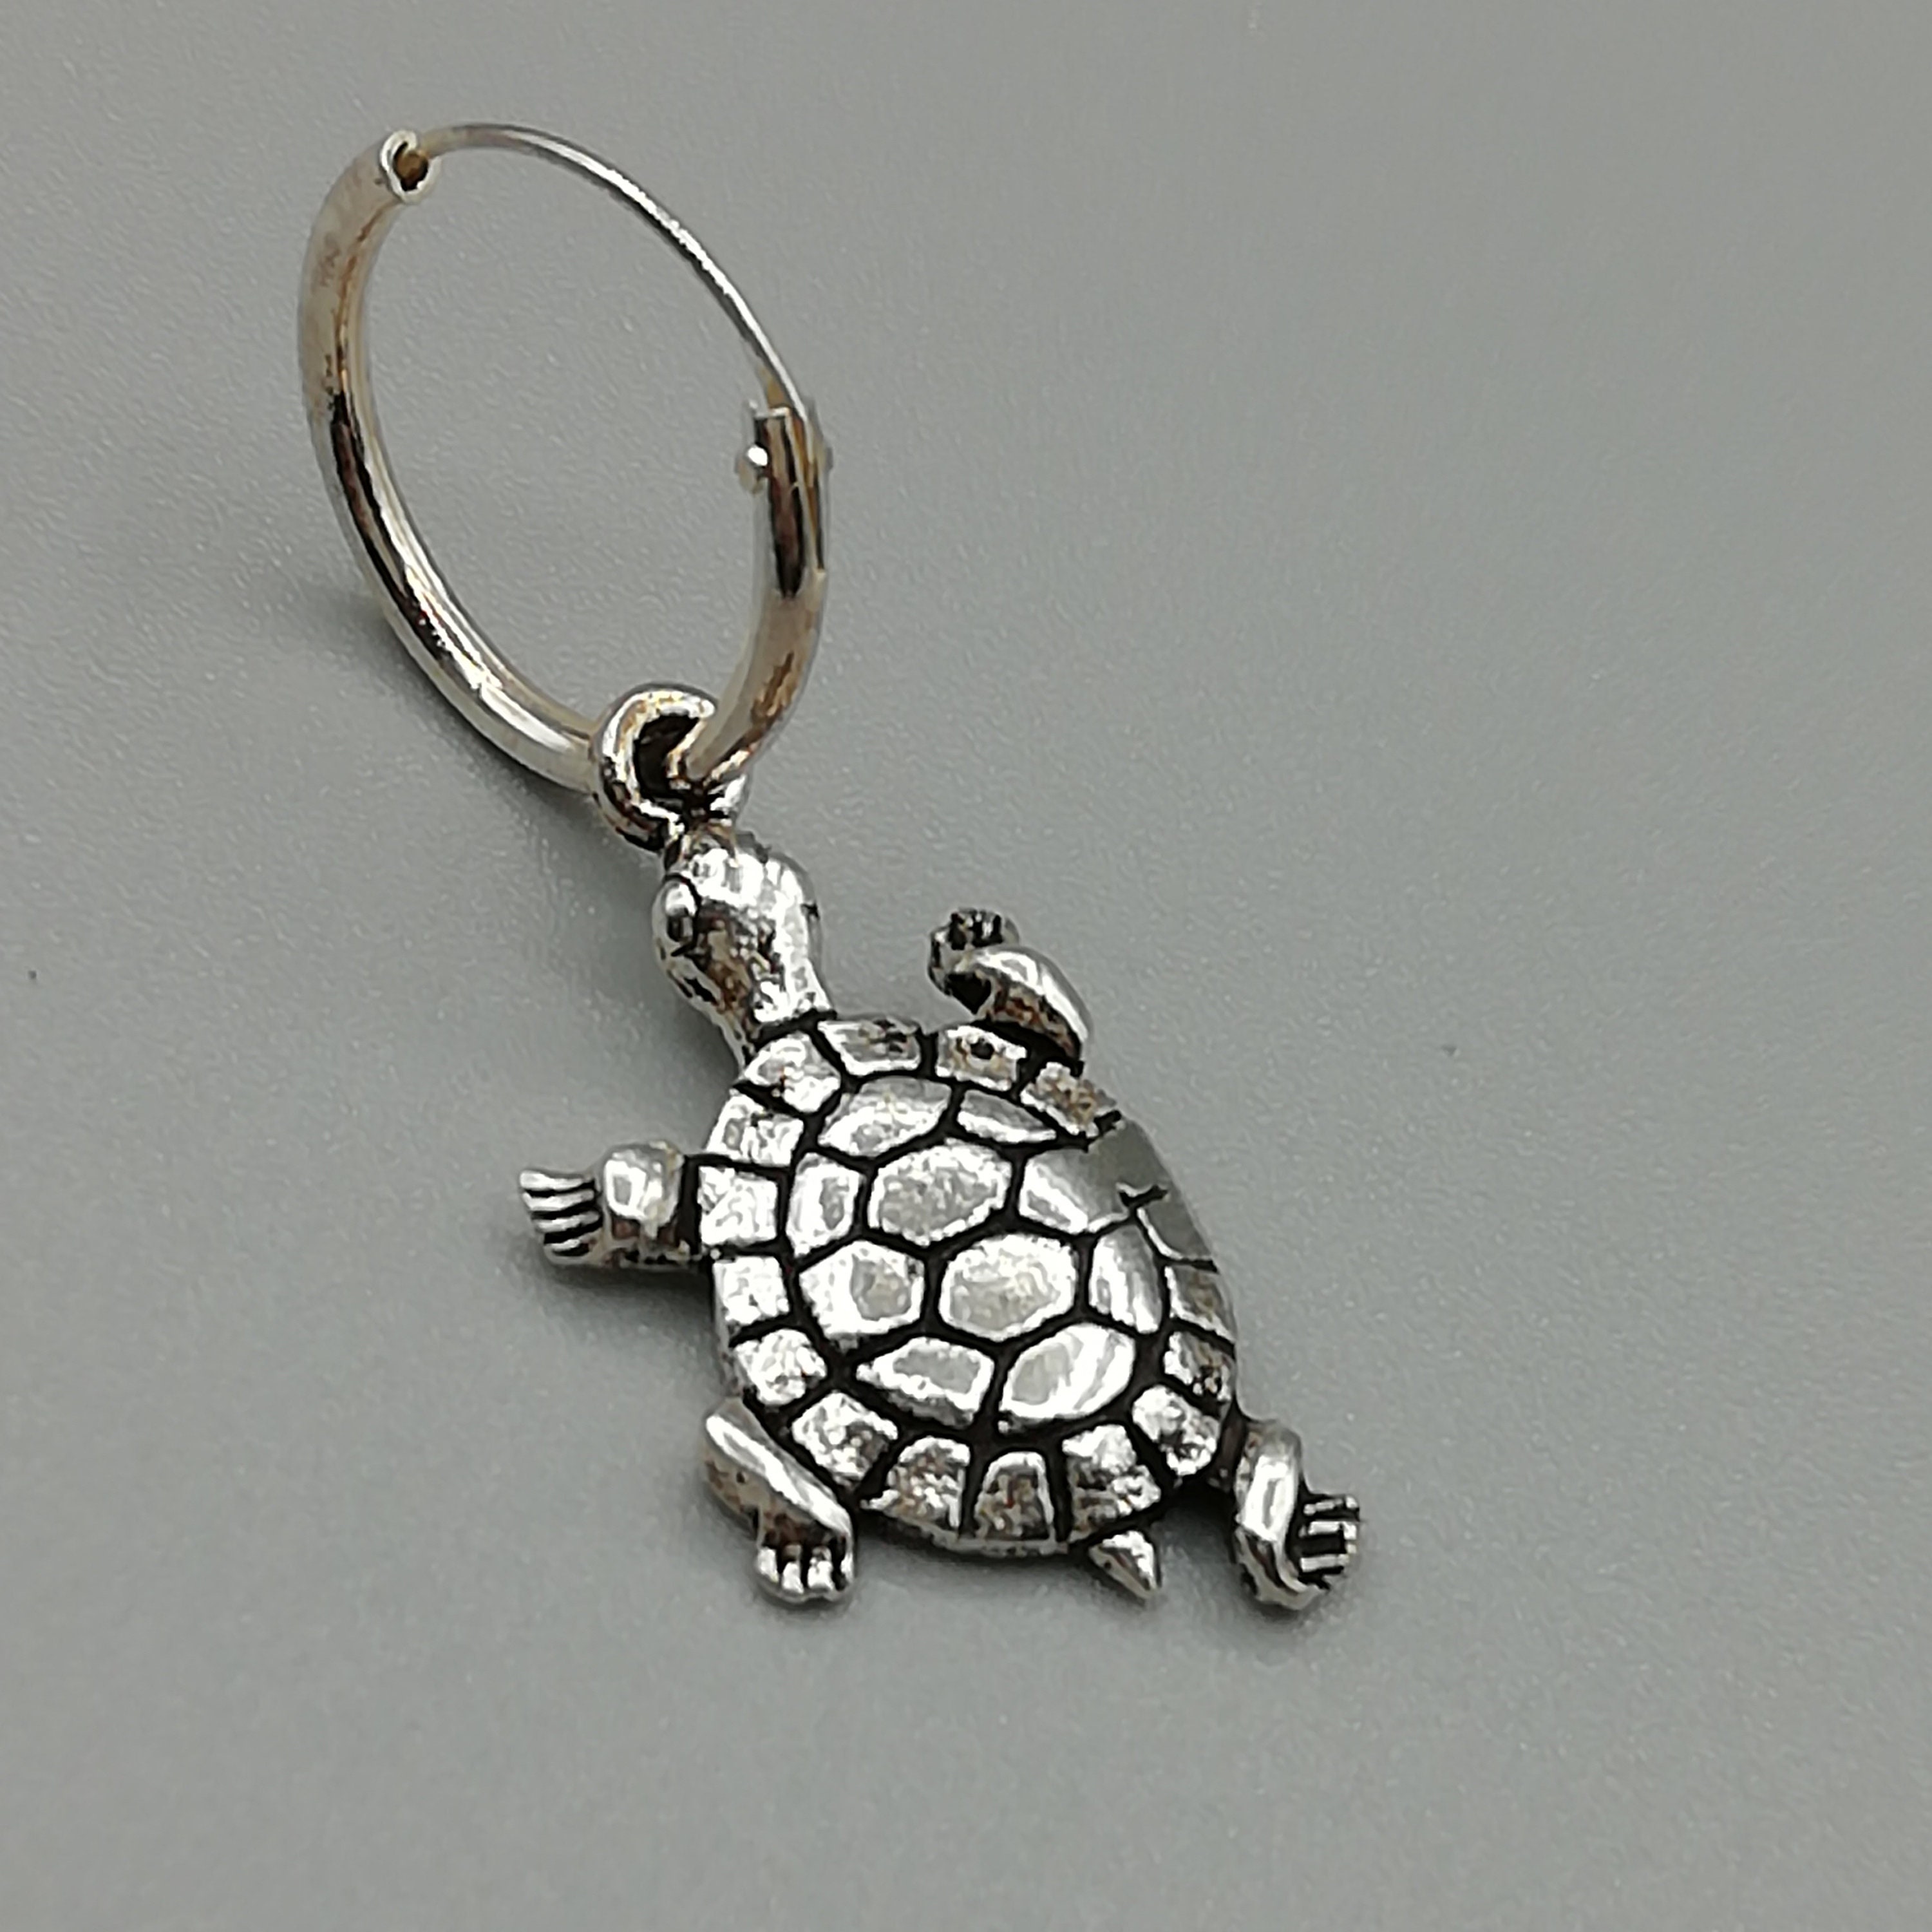 Tiny turtle charm hoops Sterling silver charm hoop earrings | Etsy